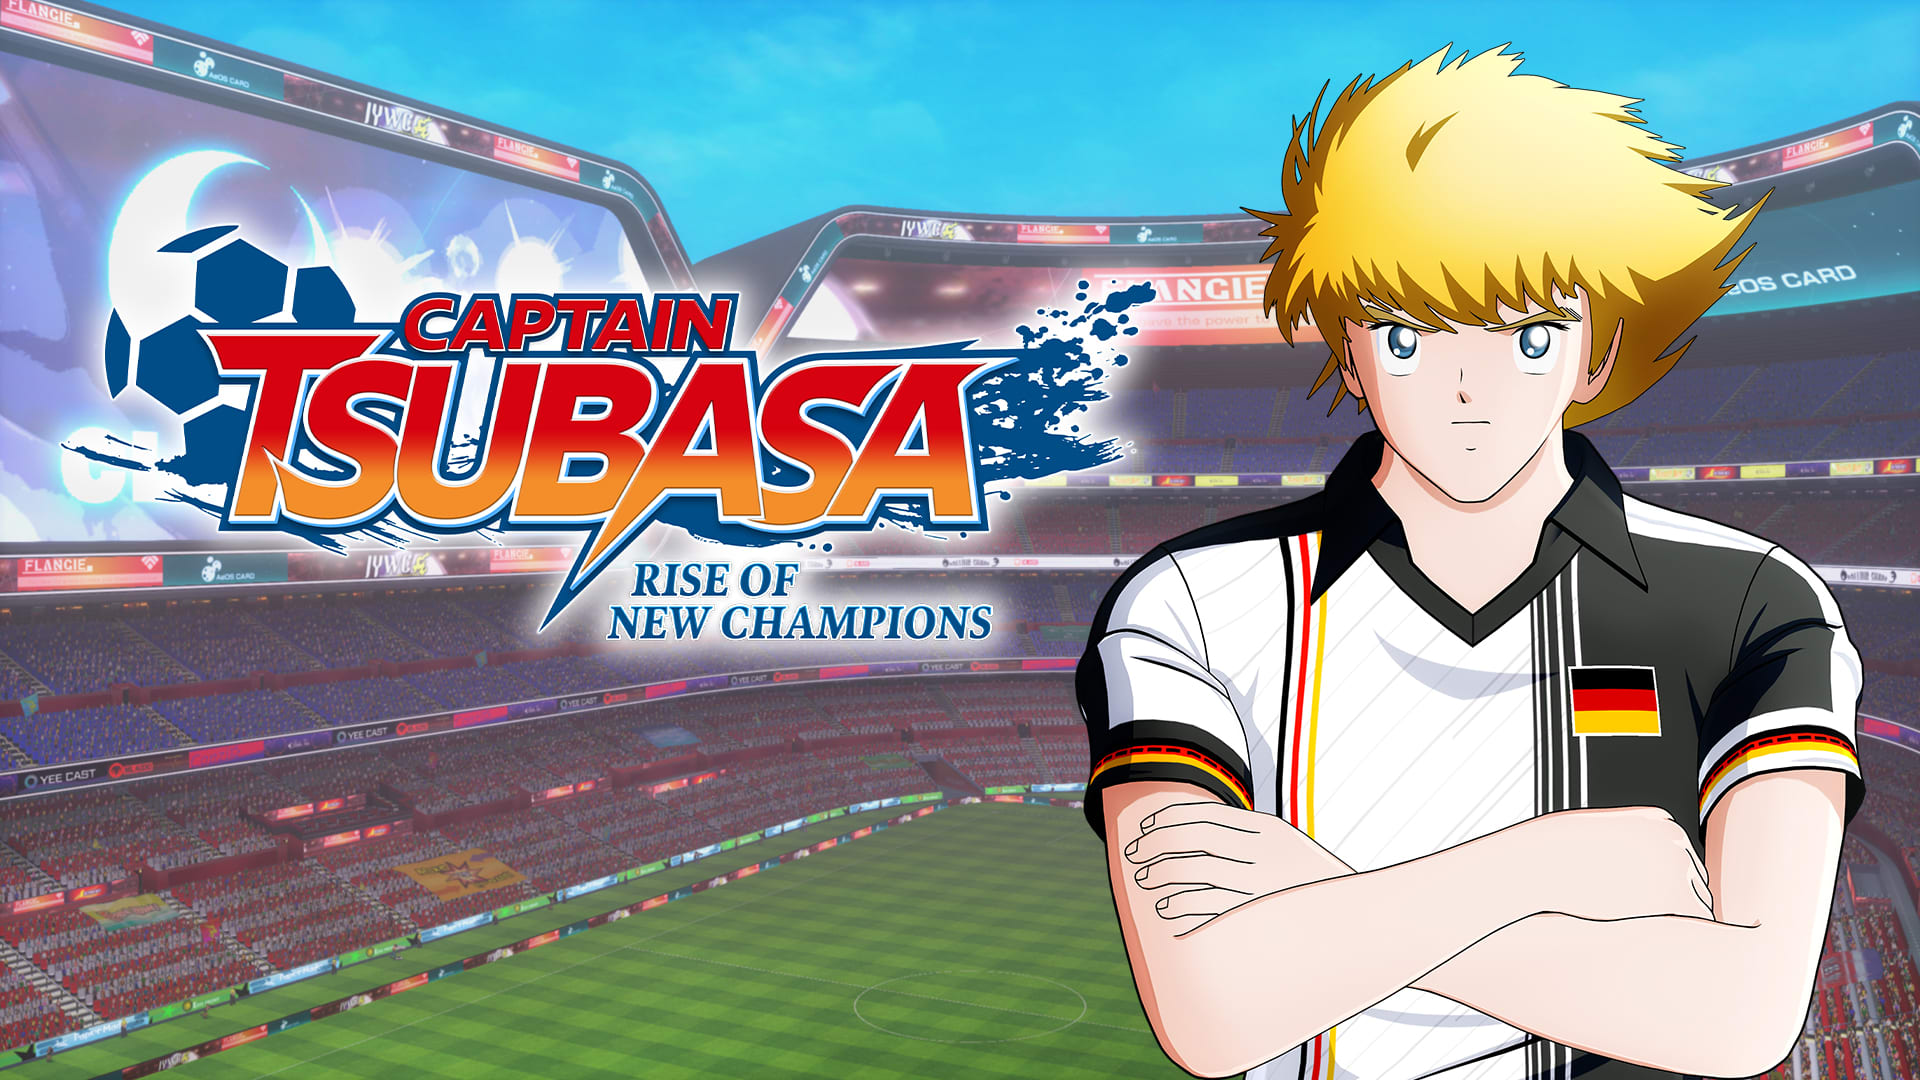 Captain Tsubasa: misión de Karl Heinz Schneider en Rise of New Champions